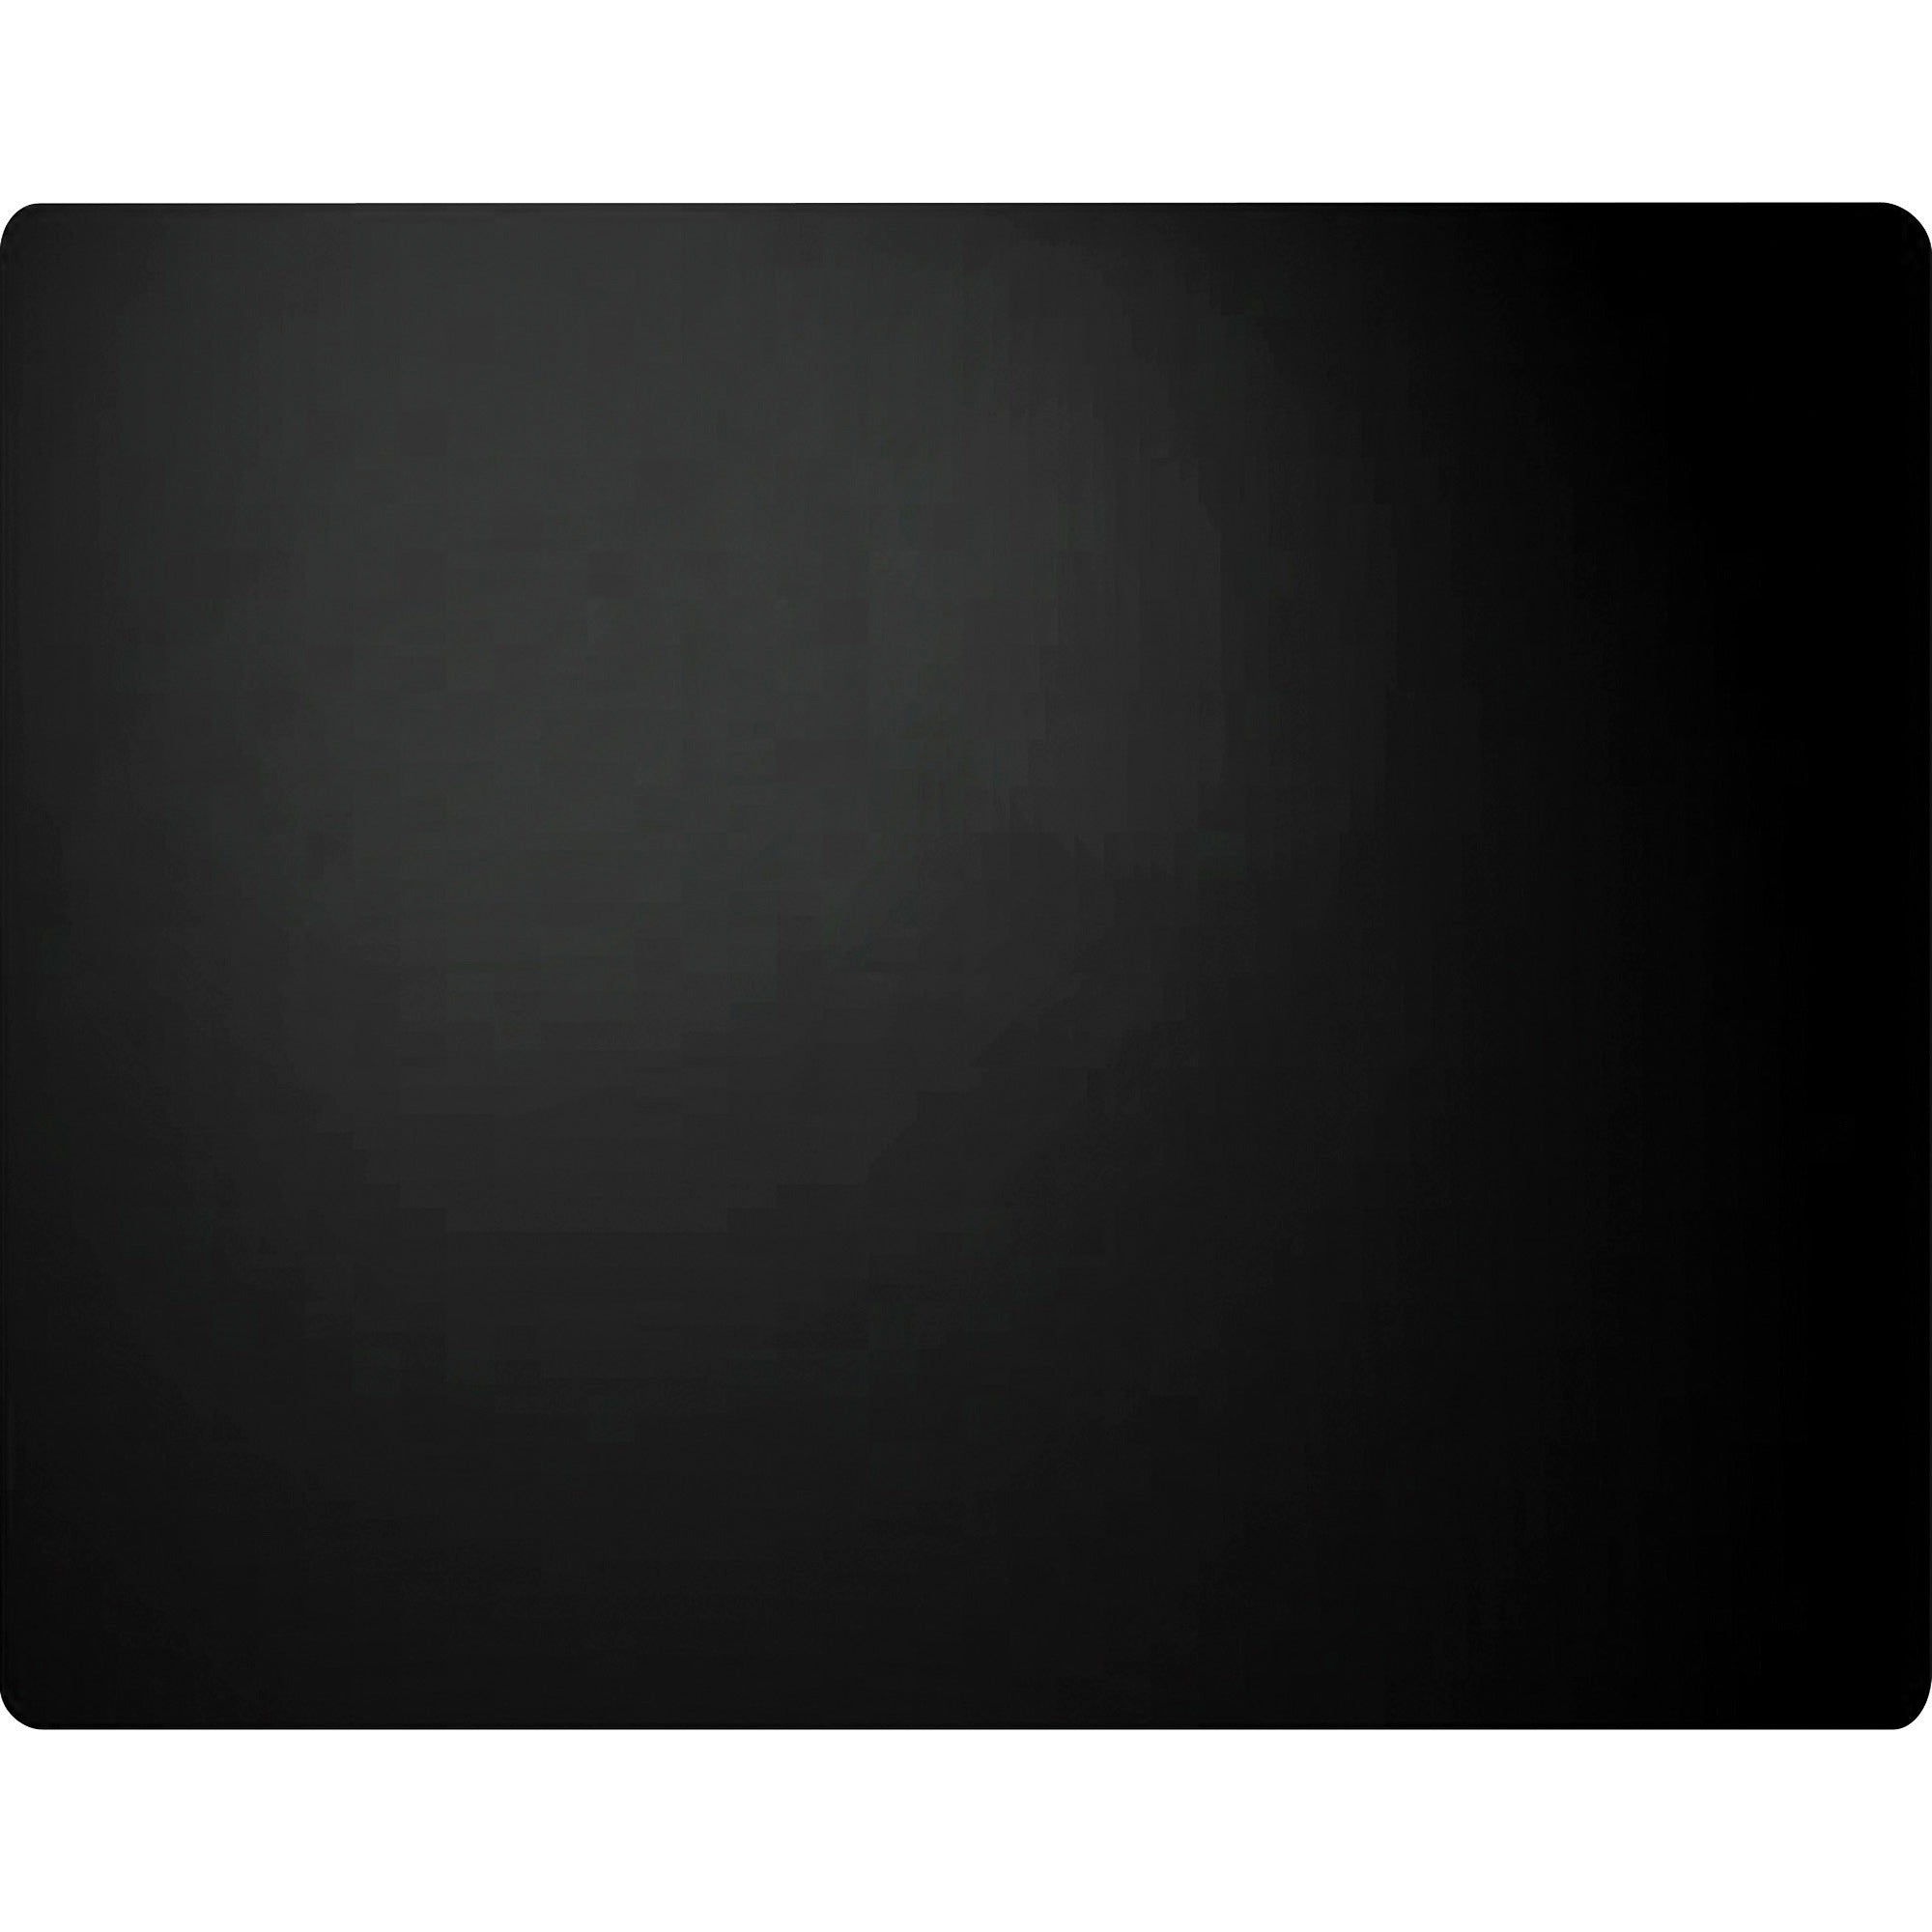 Artistic Plain Leather Desk Pad - Rectangular - 24" Width - Leather - Black - 